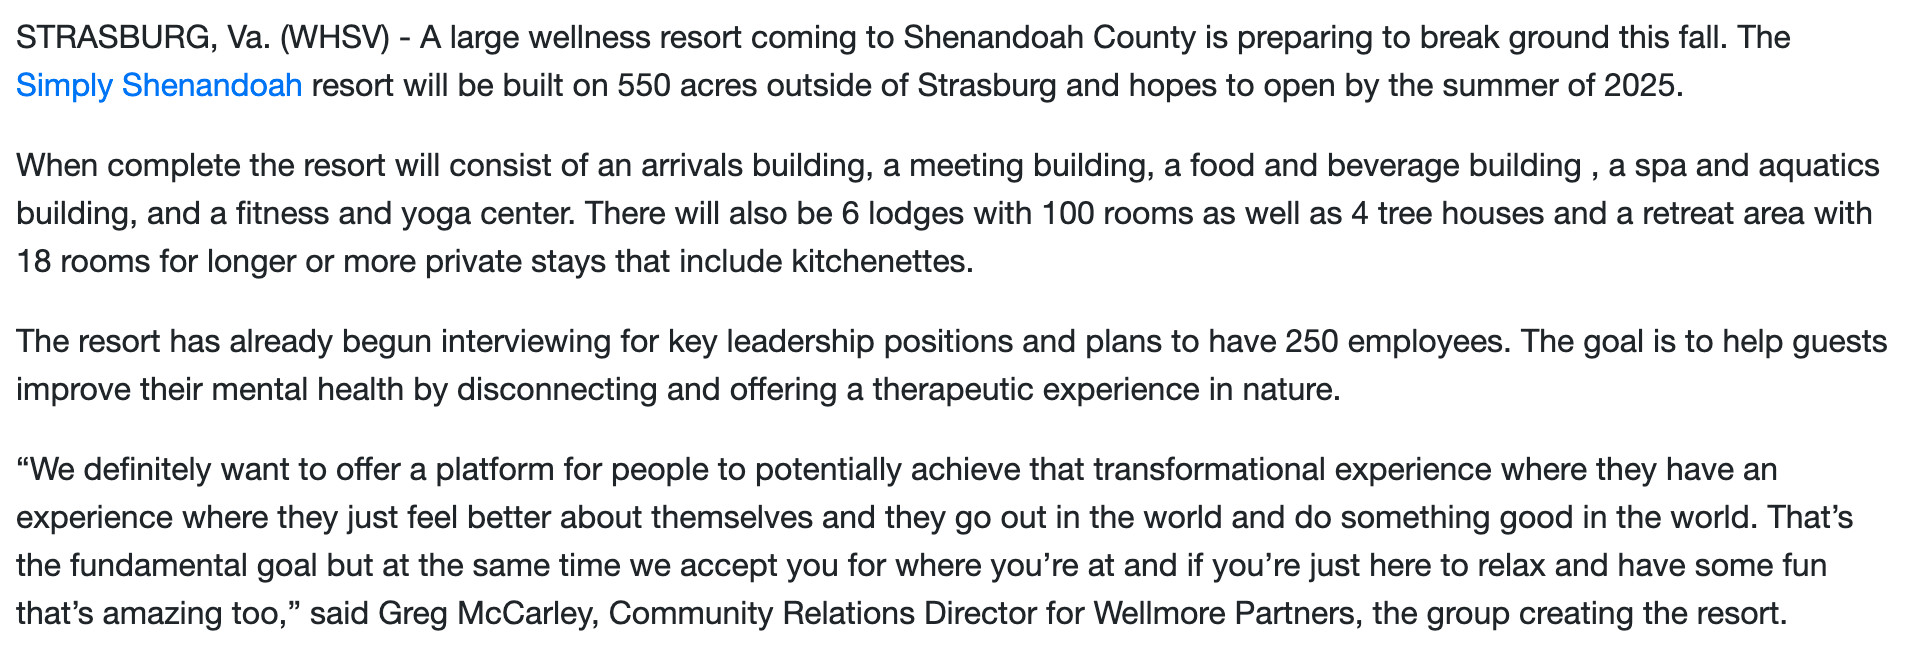 Simply Shenandoah Nature Retreat & Wellness Resort